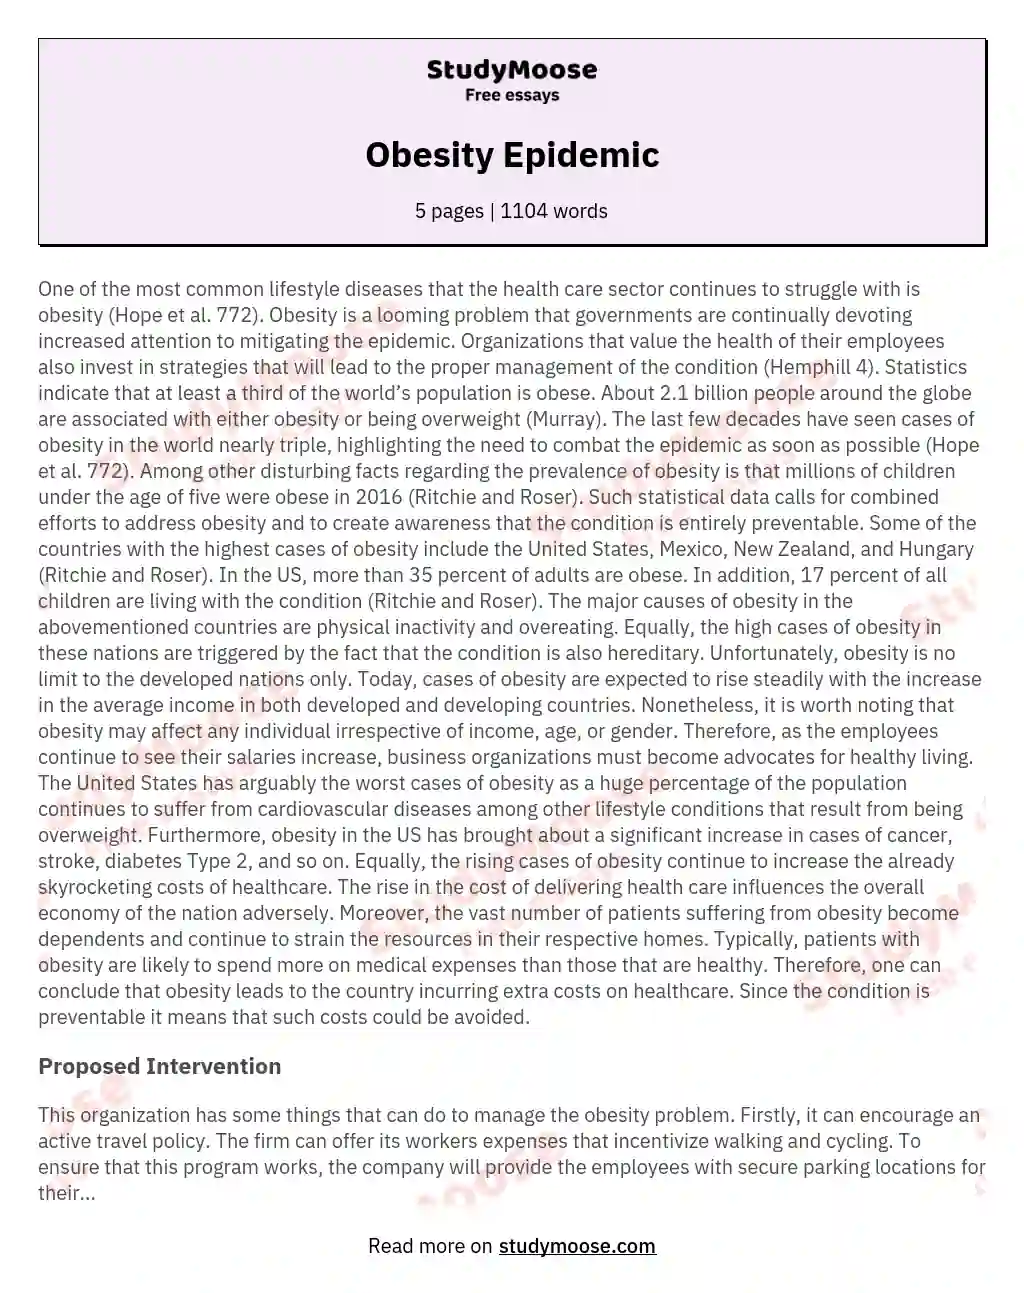 Obesity Epidemic essay